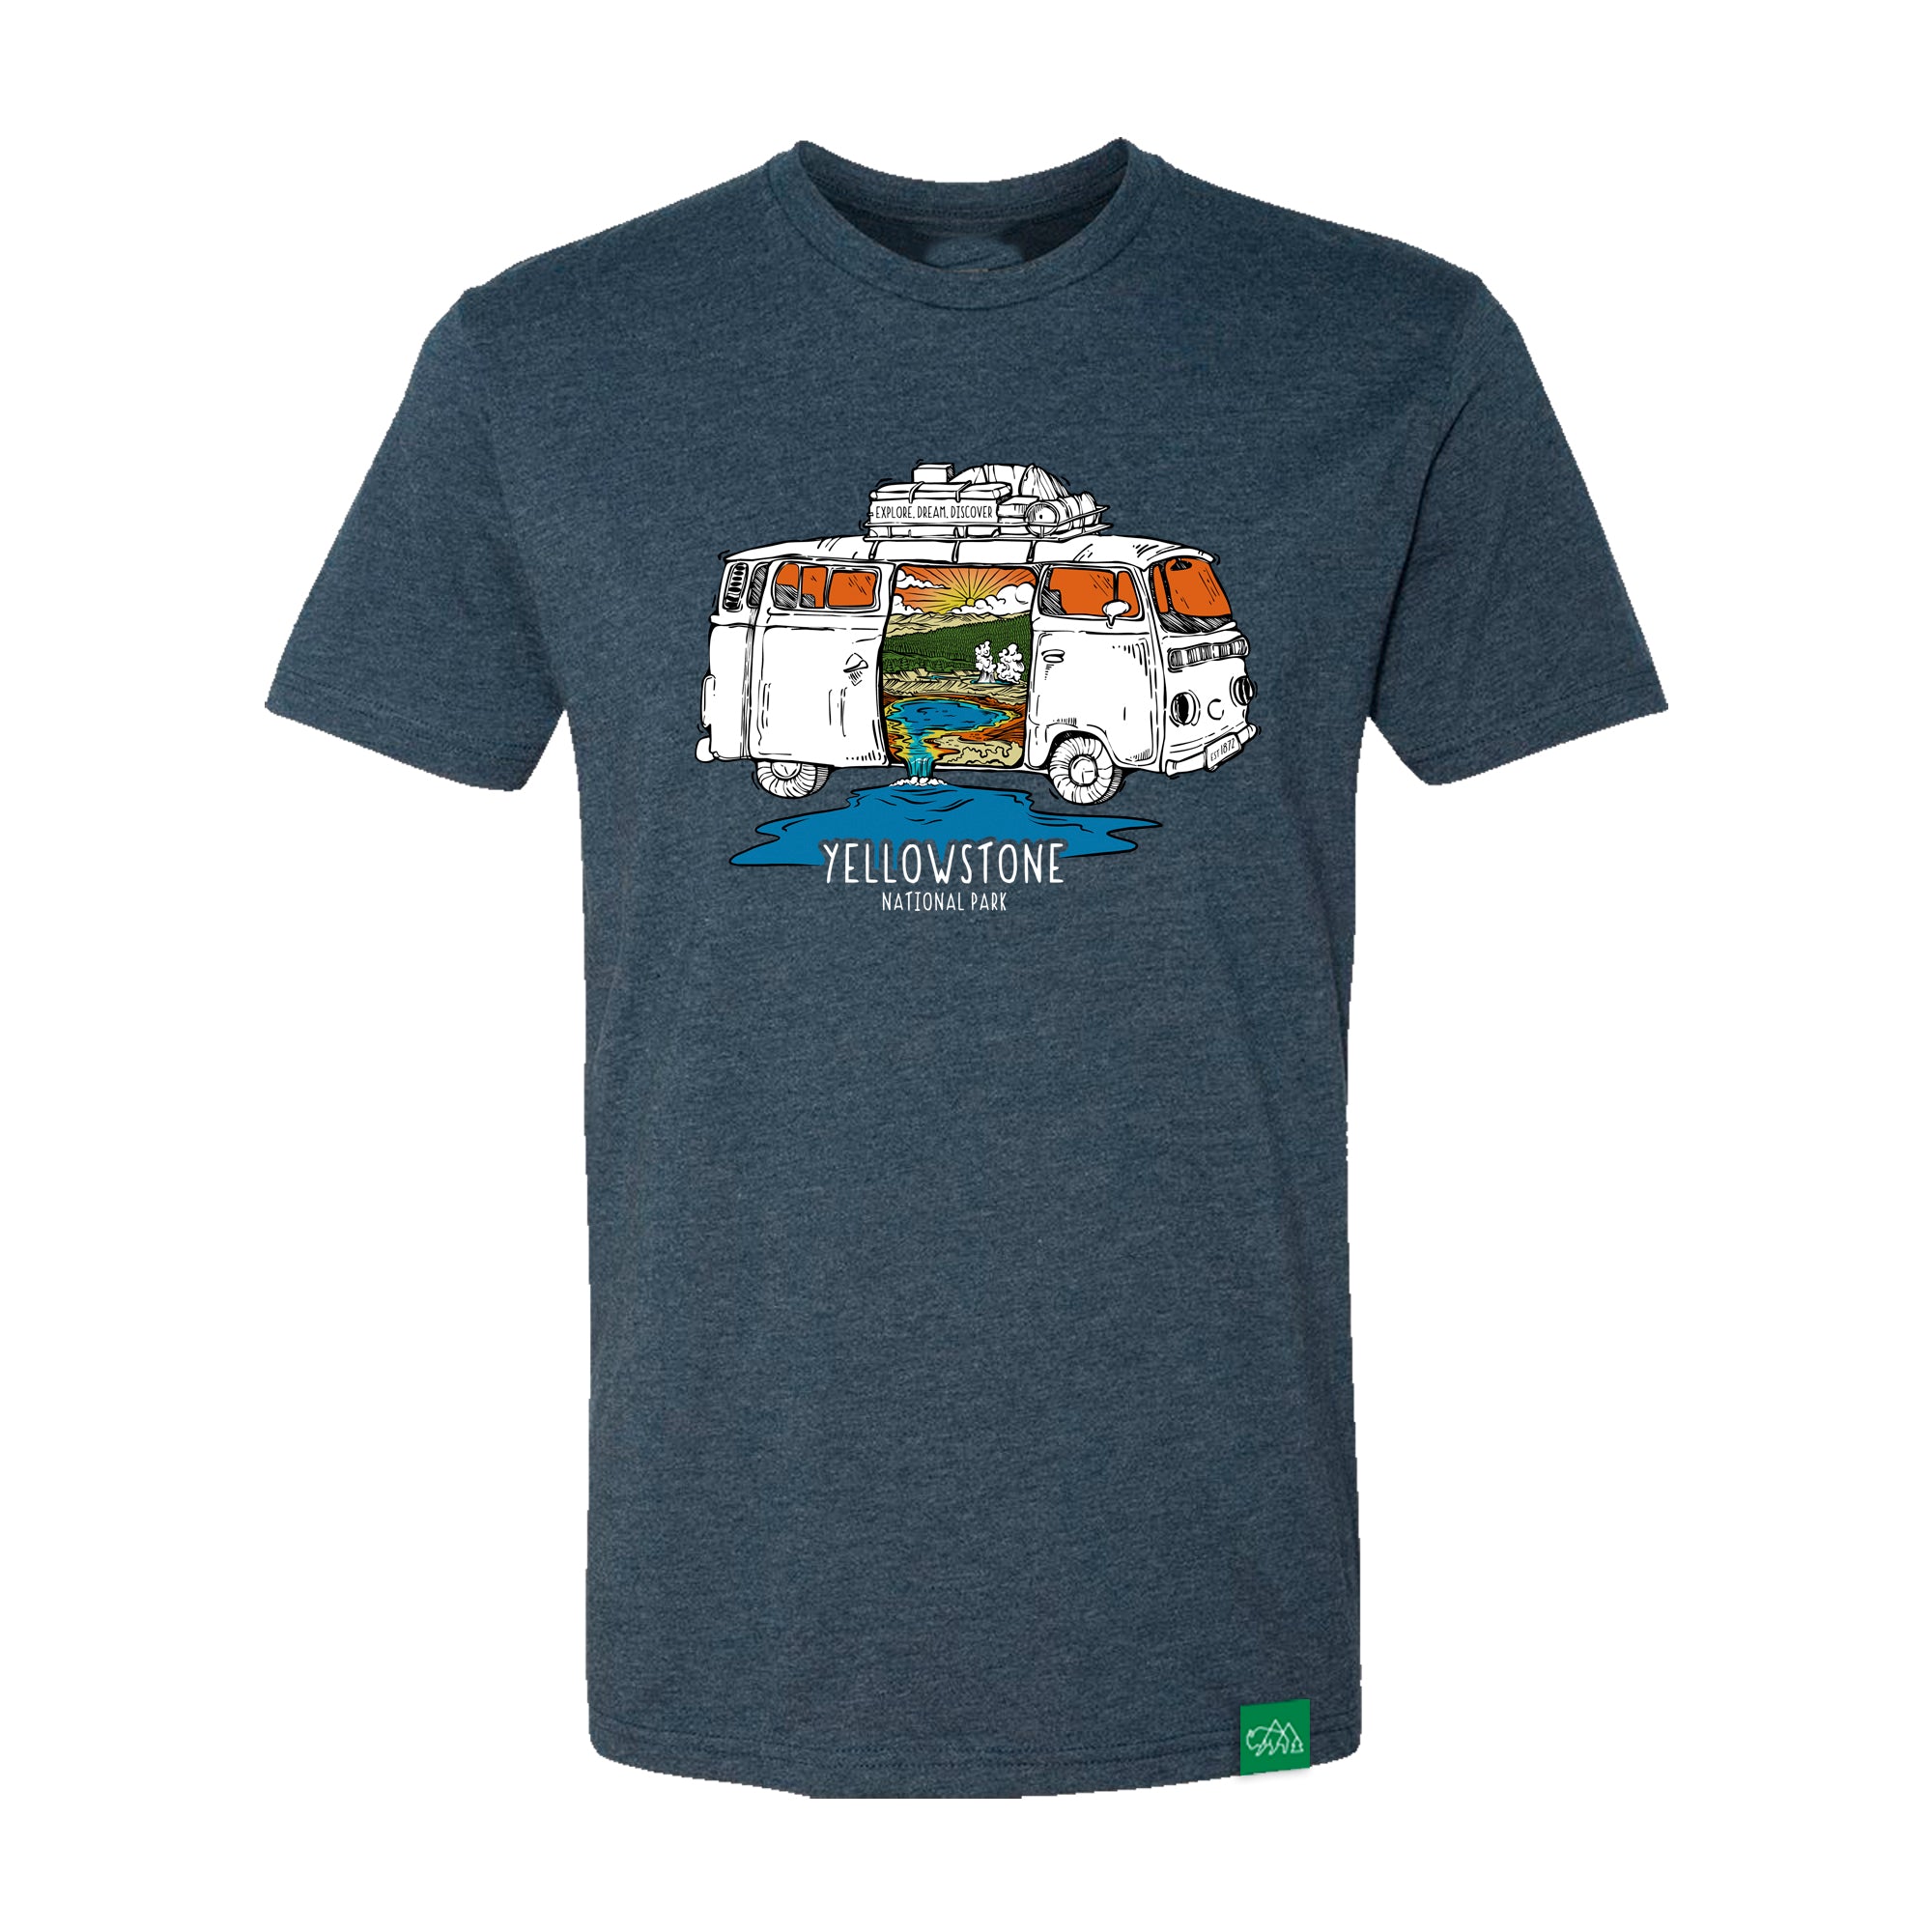 Yellowstone Road Trip T-Shirt